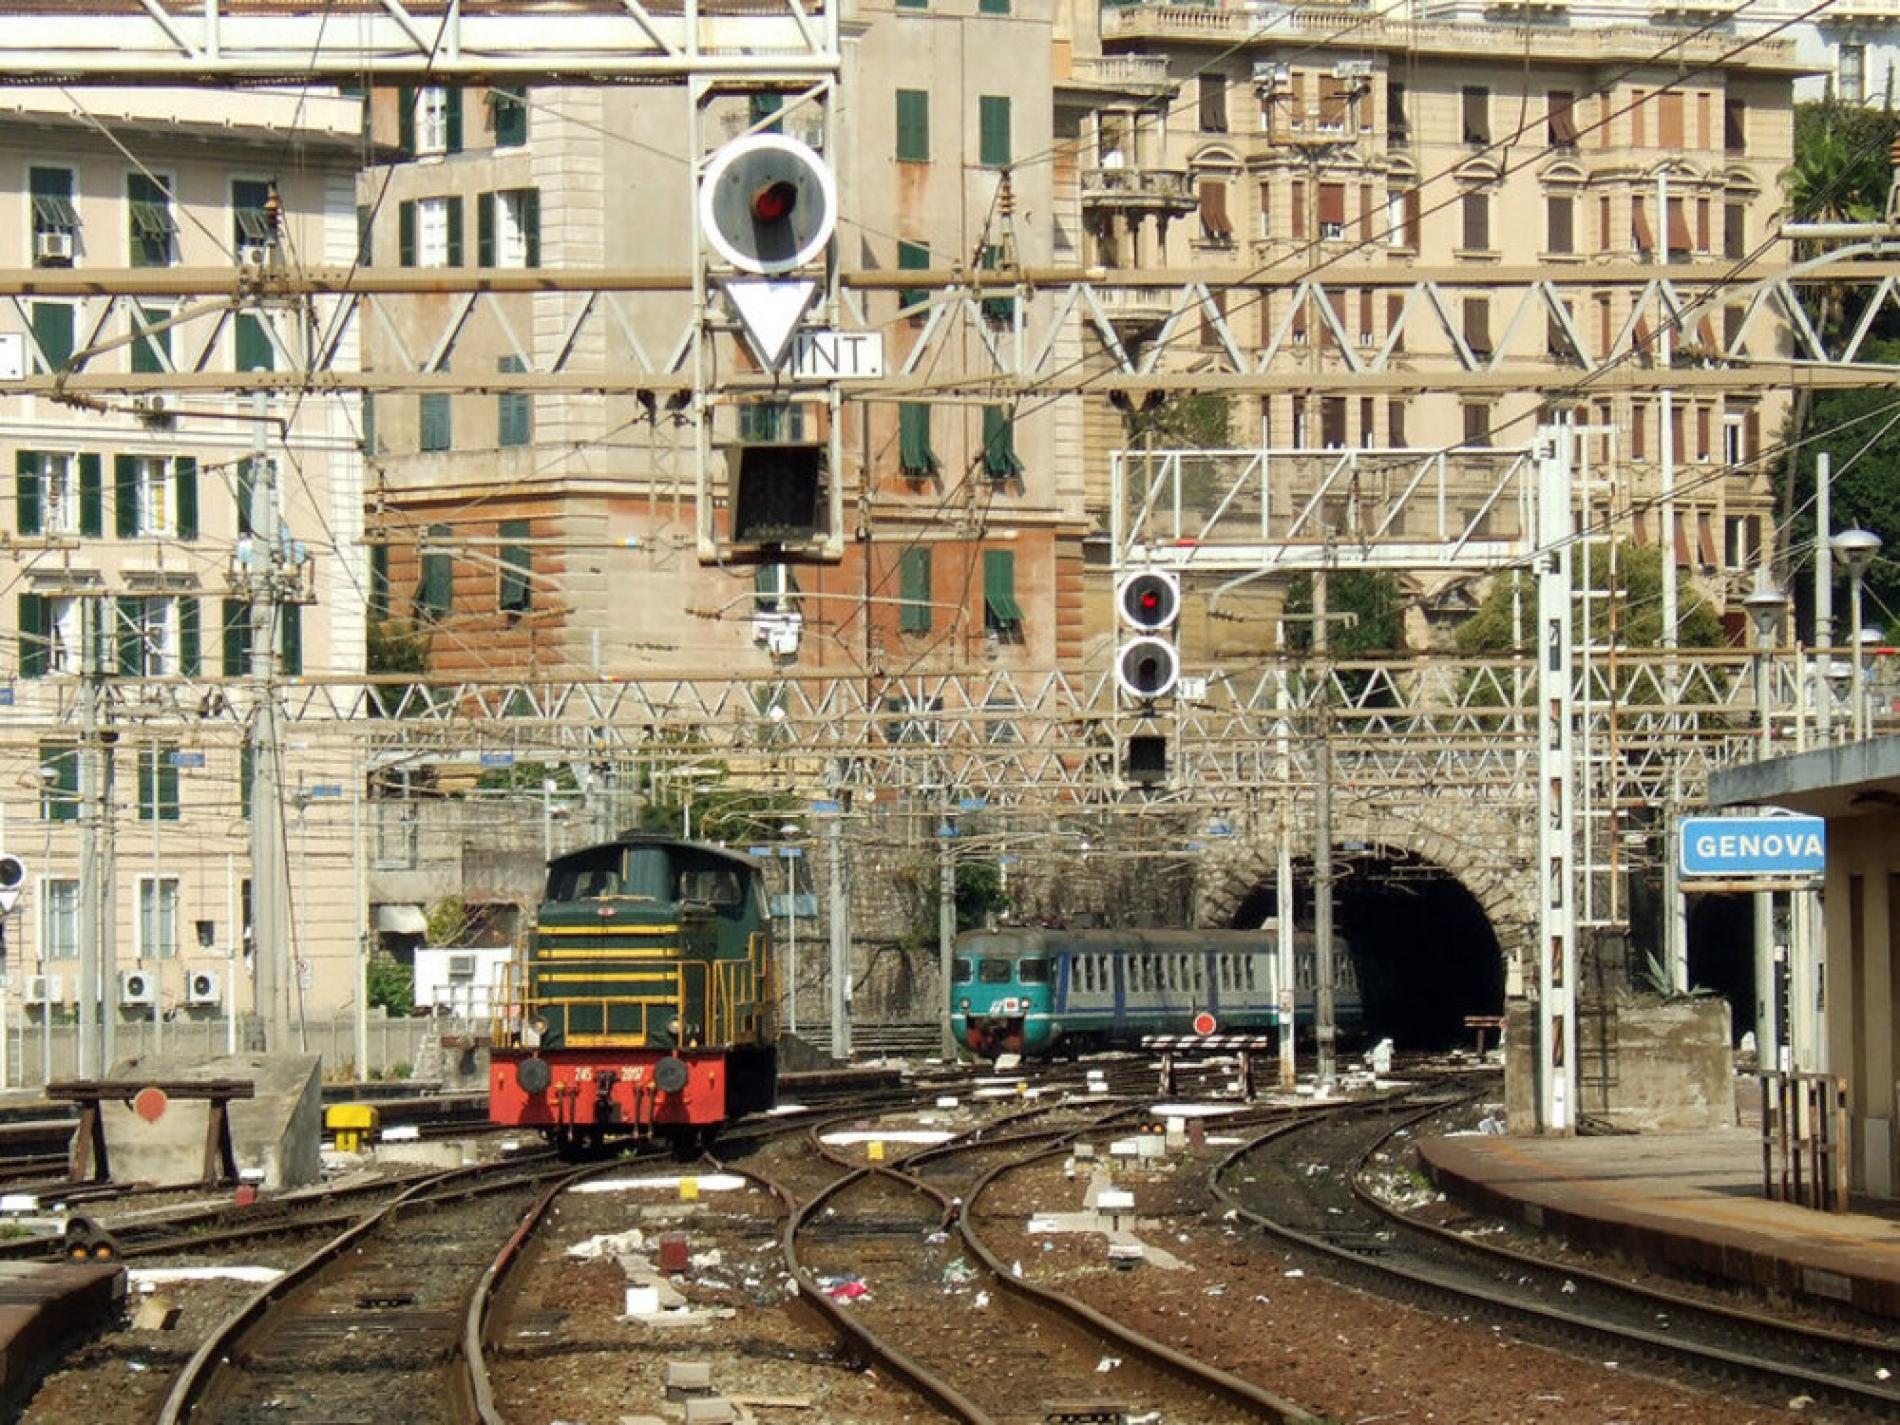 Linea ferroviaria Novi-Genova, ancora disagi per i pendolari